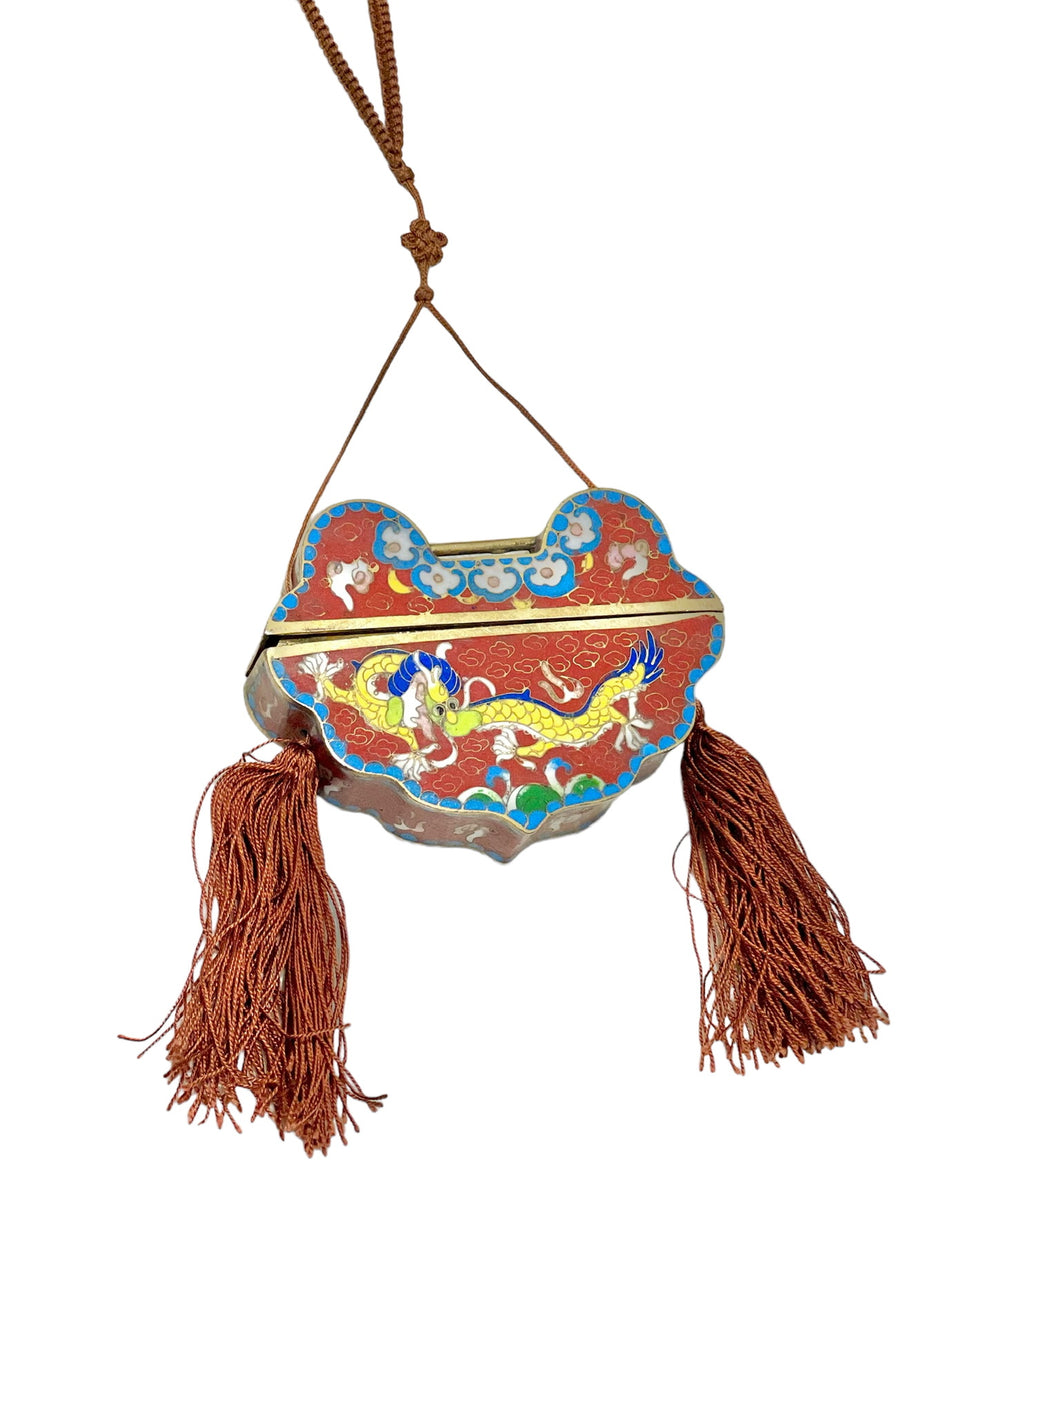 Vintage Chinese Cloisonnè Opium Box Pendant Necklace Dragon Design, Red